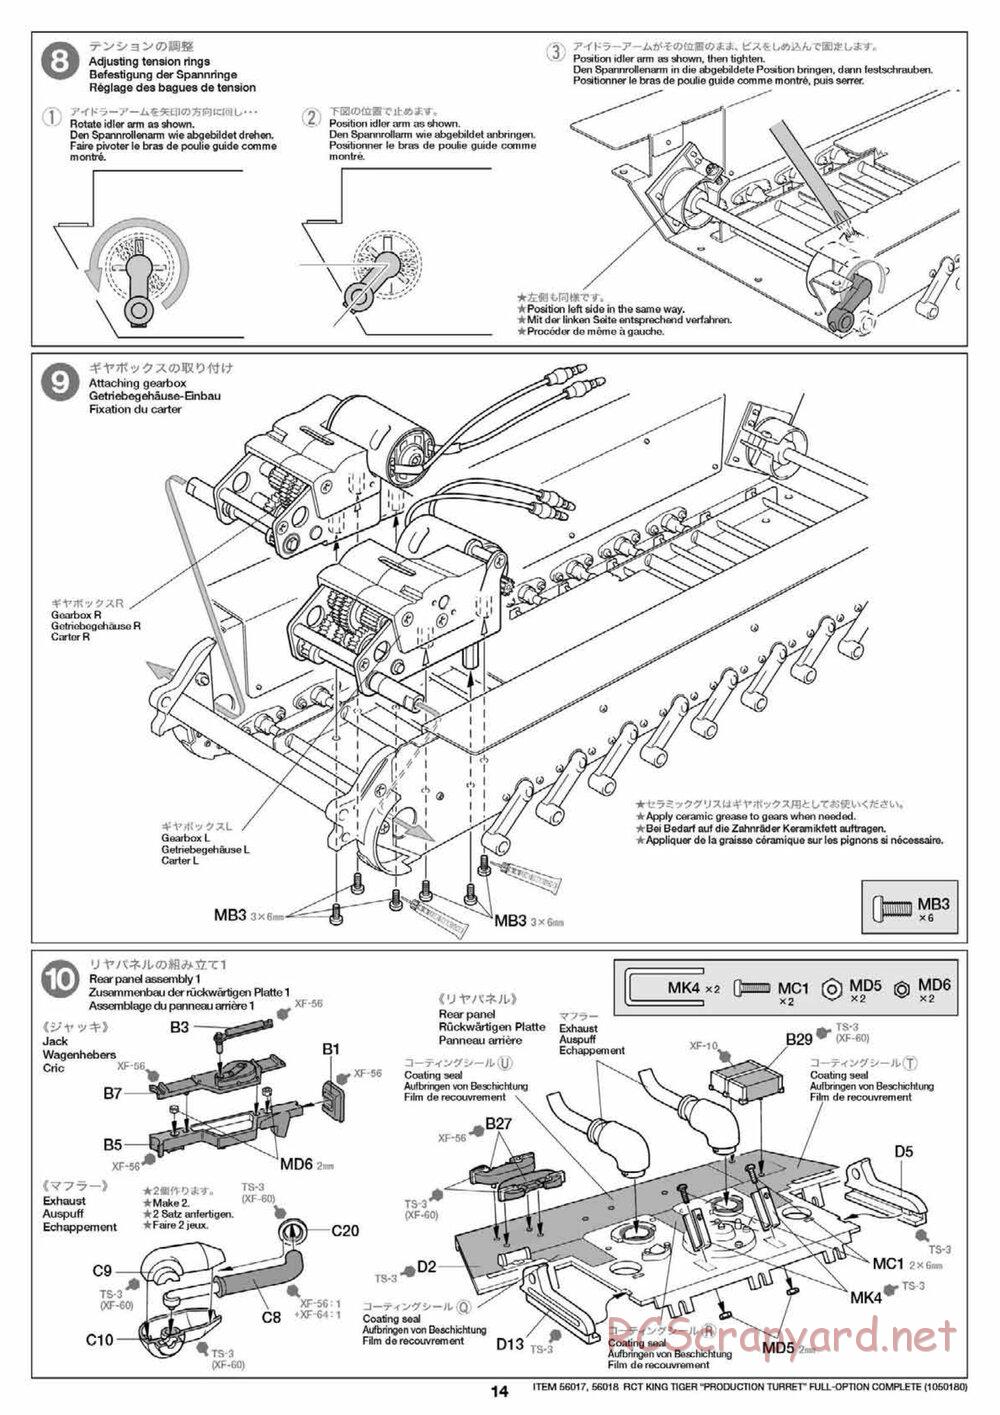 Tamiya - King Tiger - 1/16 Scale Chassis - Manual - Page 14